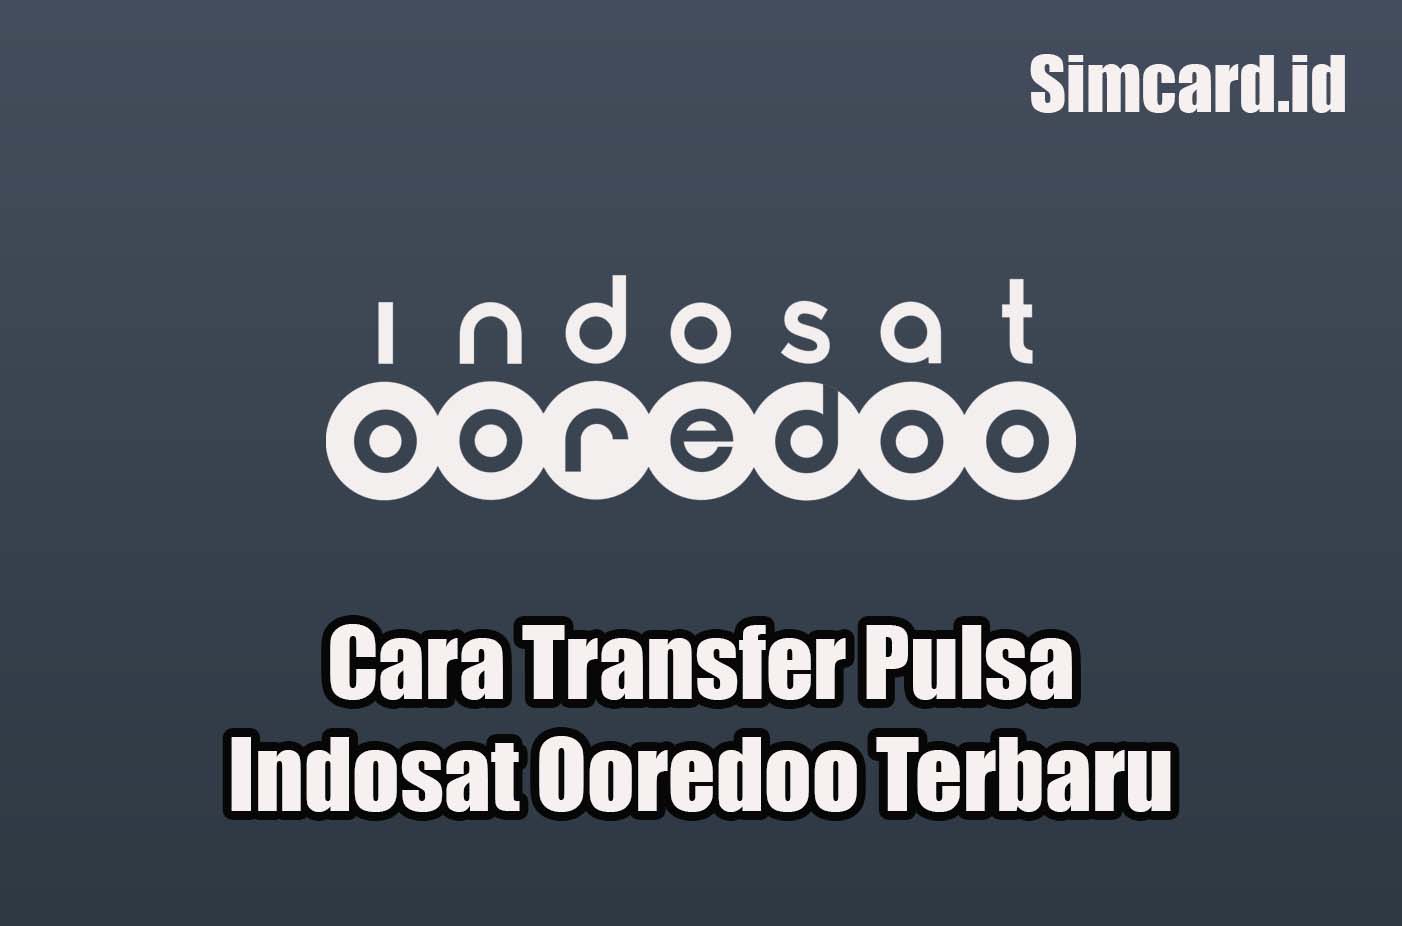 Cara Transfer Pulsa Indosat Ooredoo Terbaru